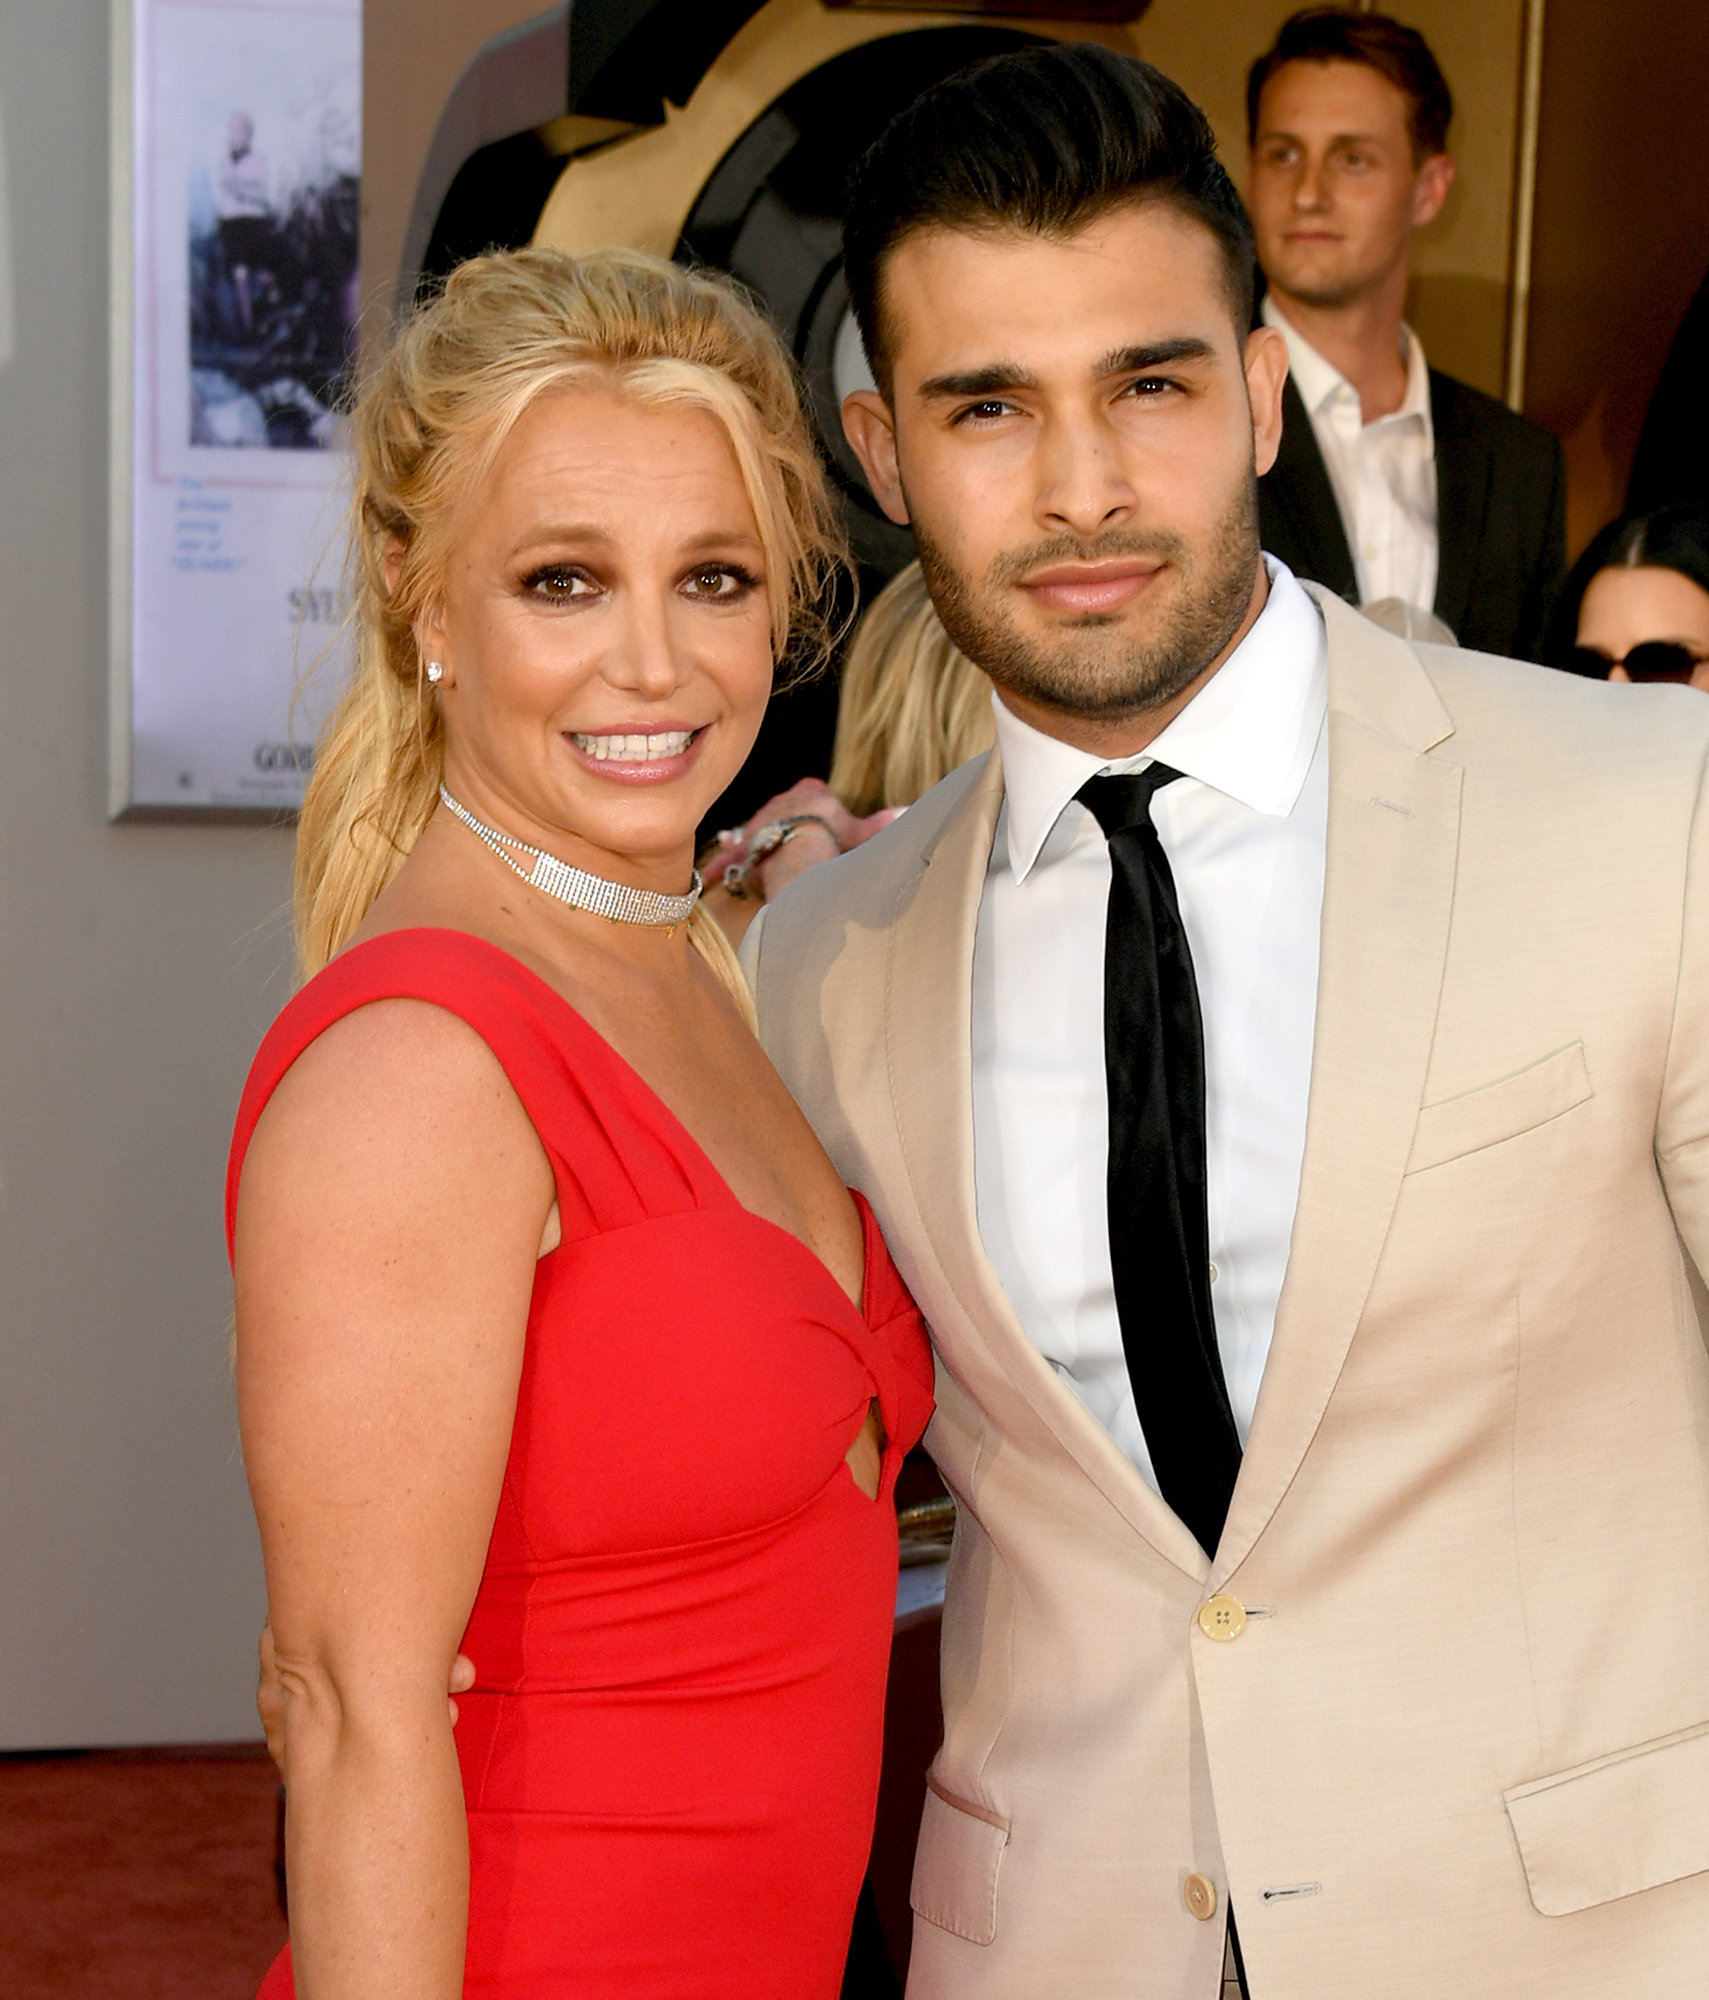 Flet Sam Asghari, tregon si po shkon martesa e tij me Britney Spears